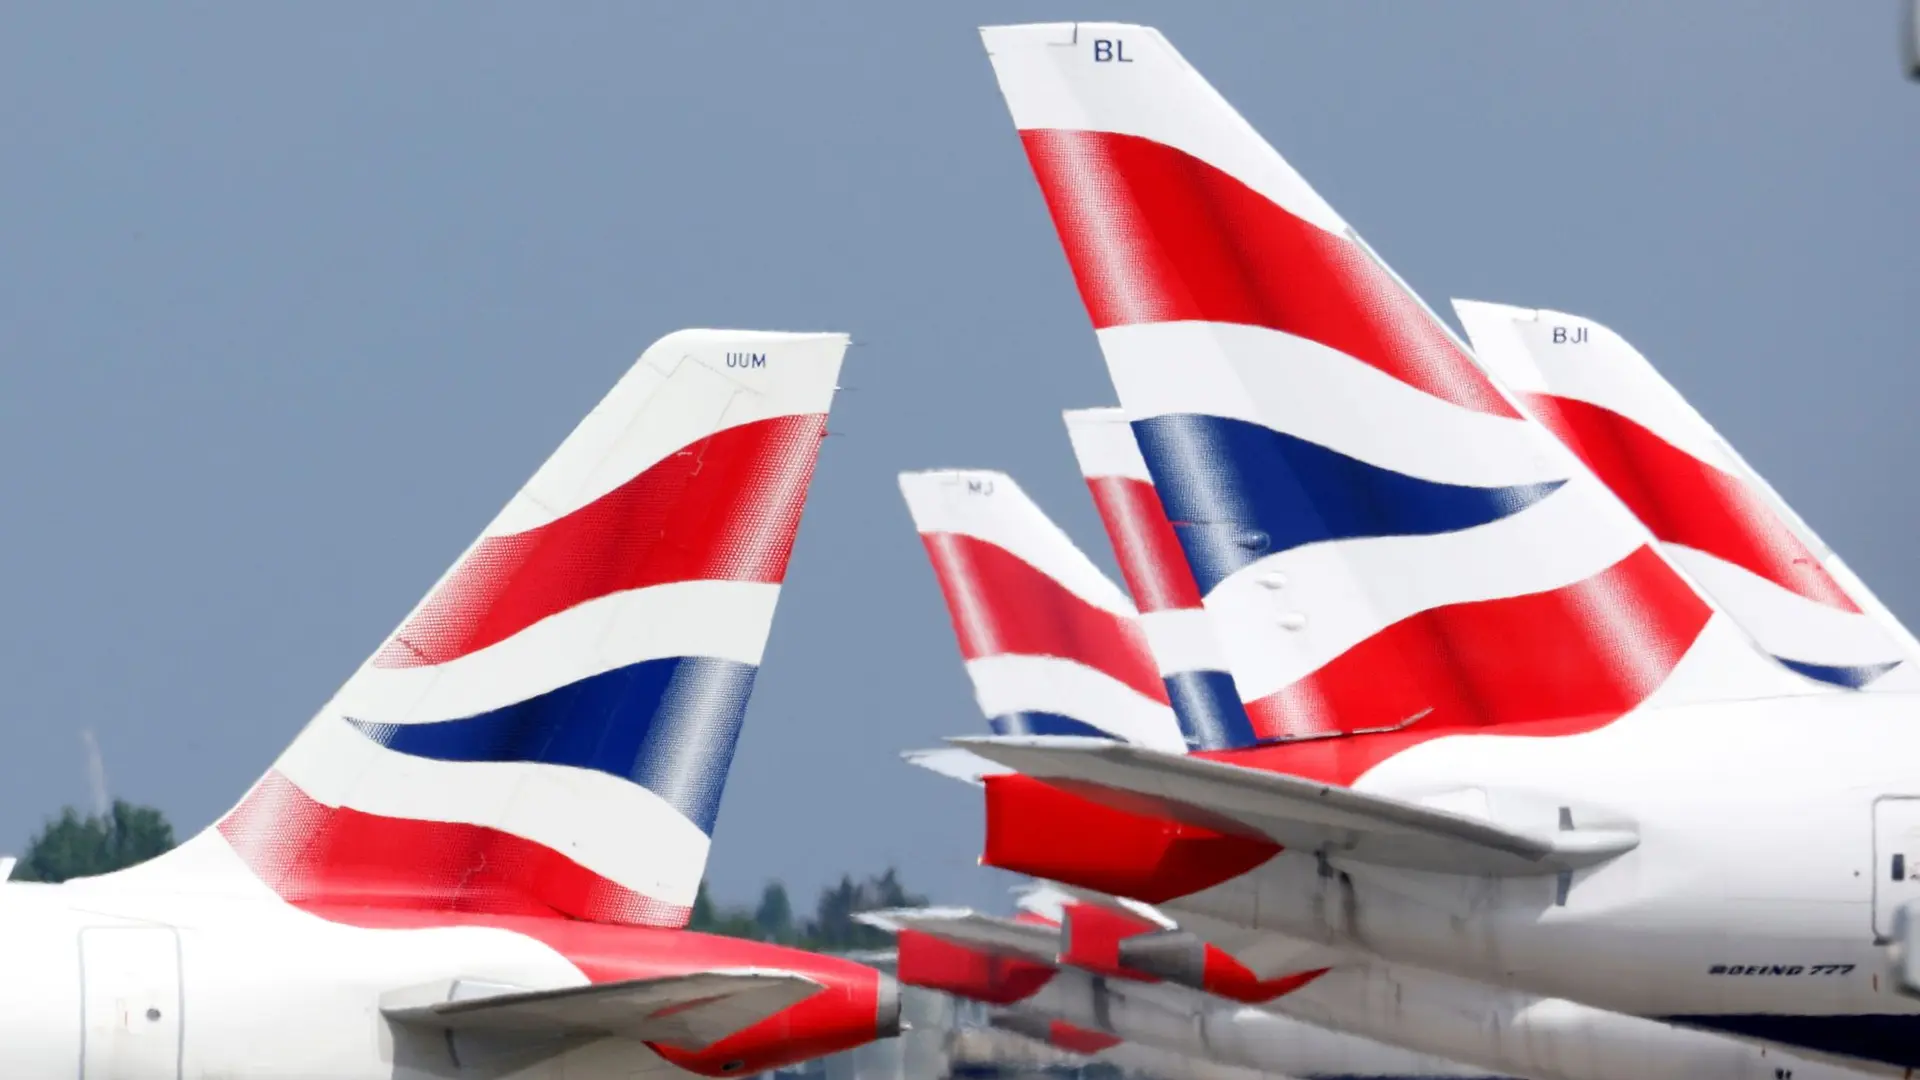 british airways' planes at an airport